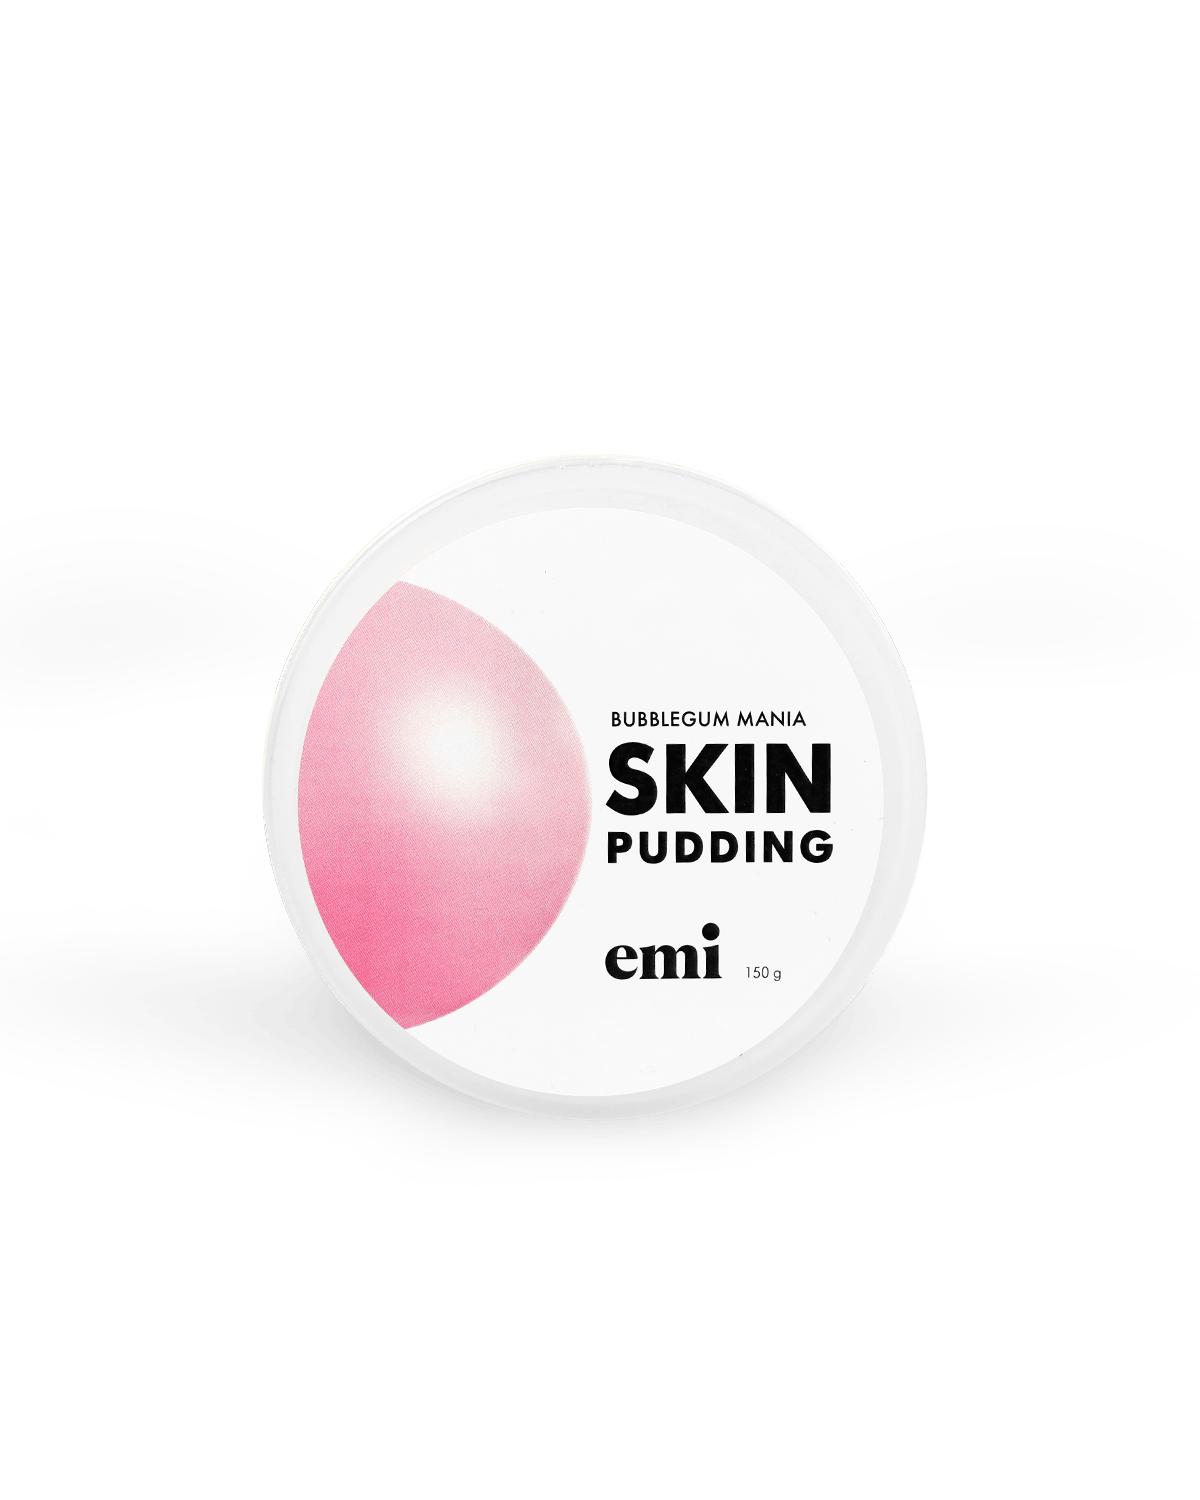 EMI Skin Pudding Bubblegum Mania, 150 g. - Retail Options!